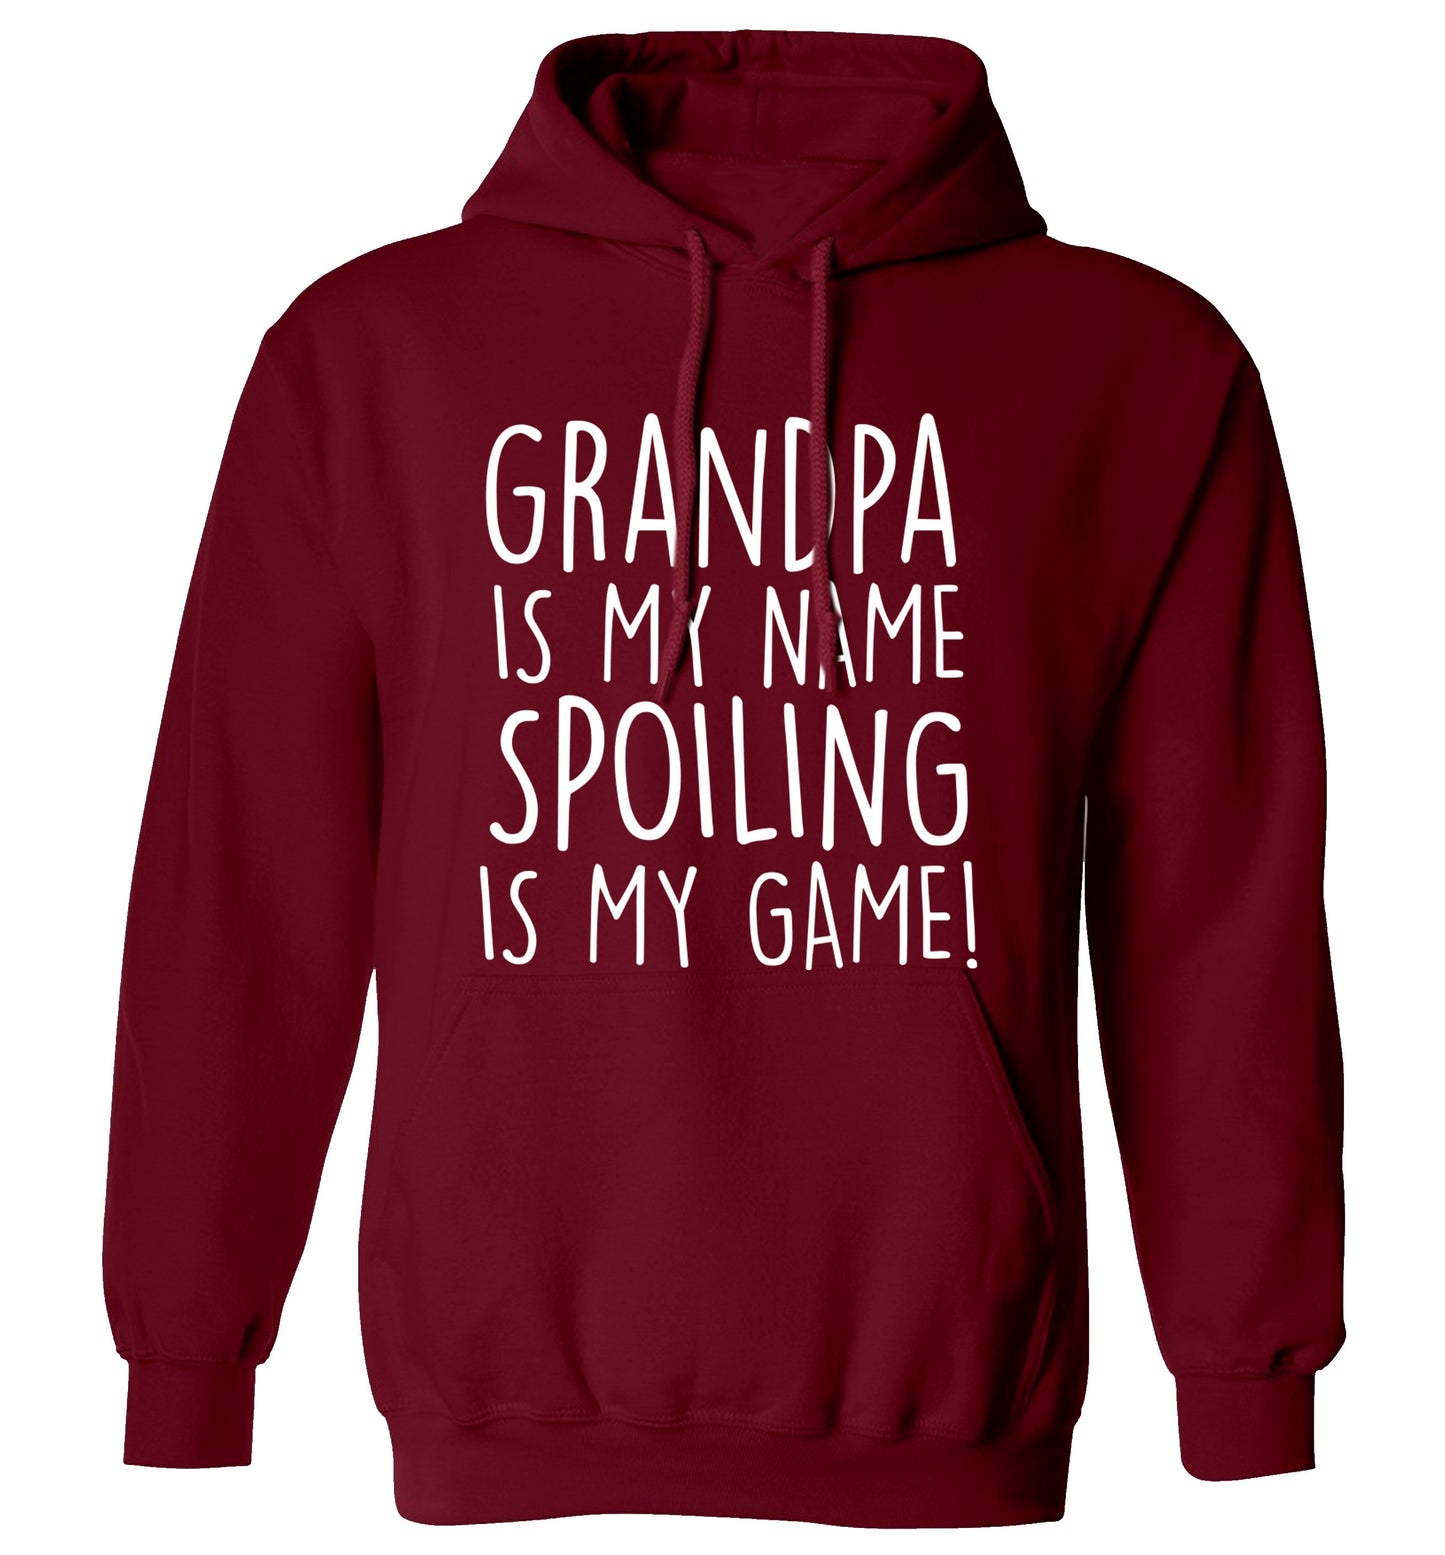 Grandpa is my name, spoiling is my game adults unisex maroon hoodie 2XL